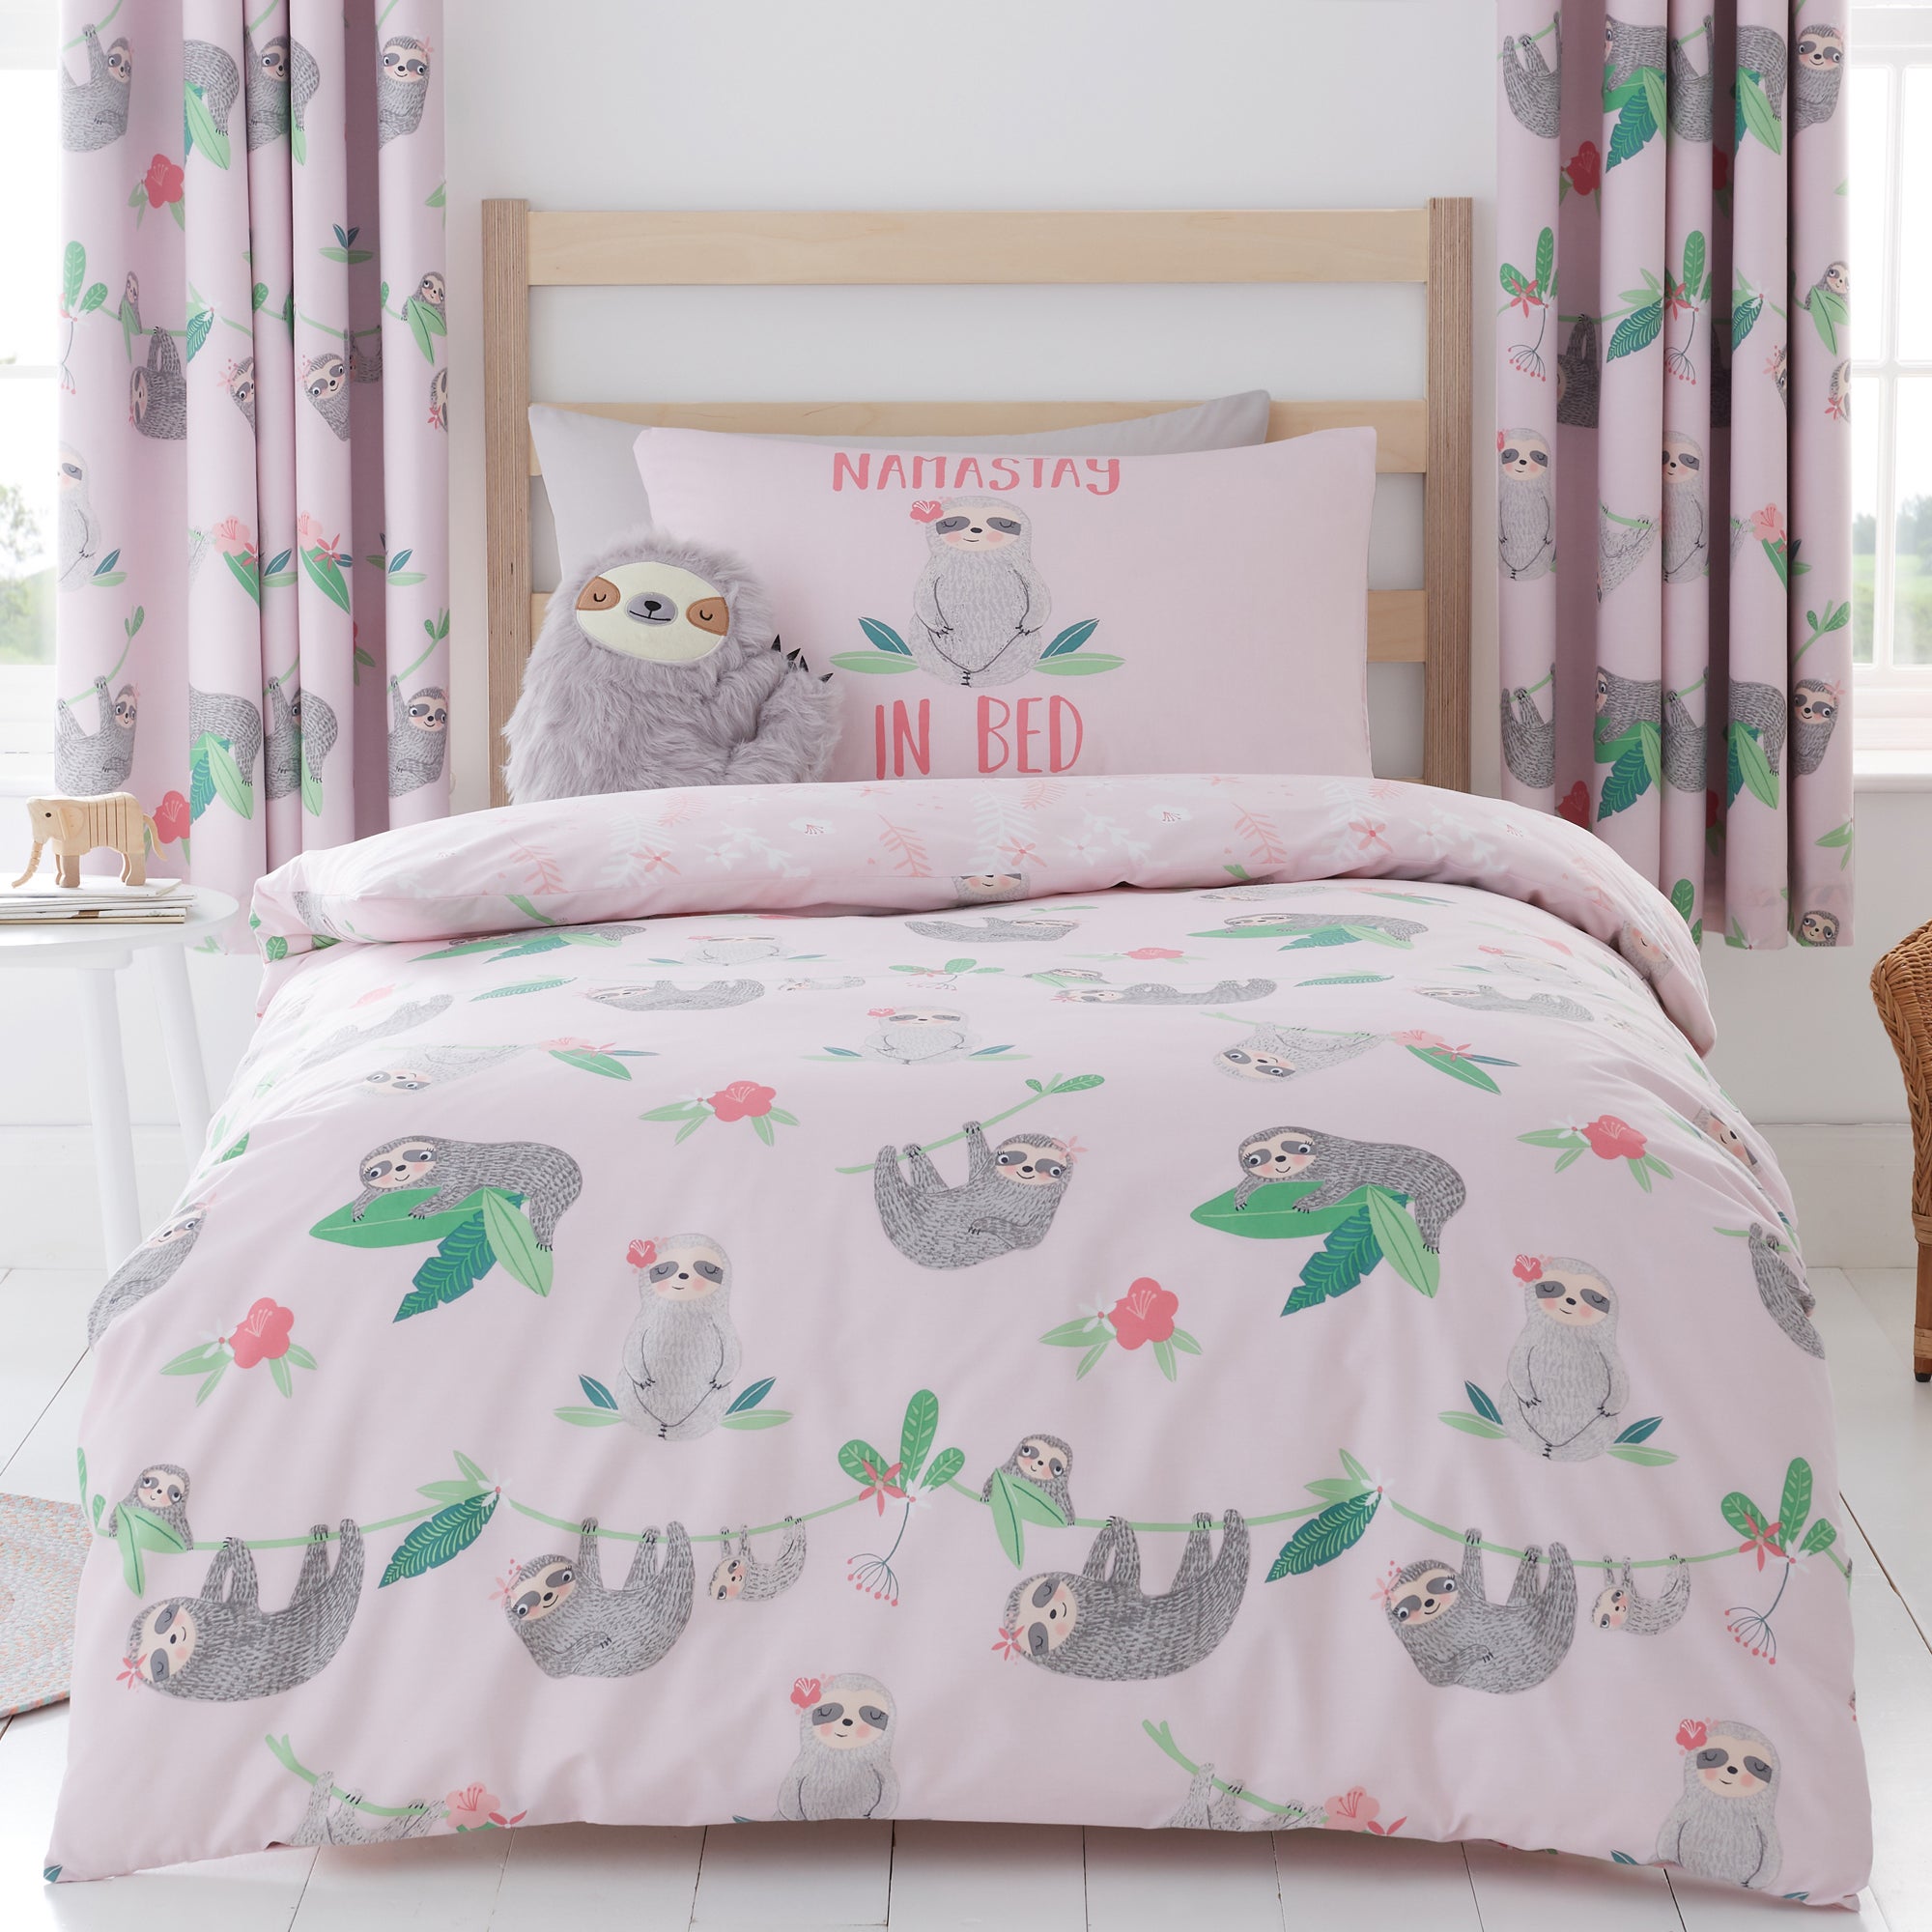 Pink Pretty Sloth Duvet Cover And Pillowcase Set Pinkgreen